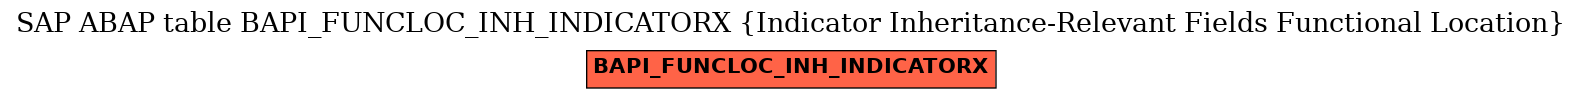 E-R Diagram for table BAPI_FUNCLOC_INH_INDICATORX (Indicator Inheritance-Relevant Fields Functional Location)